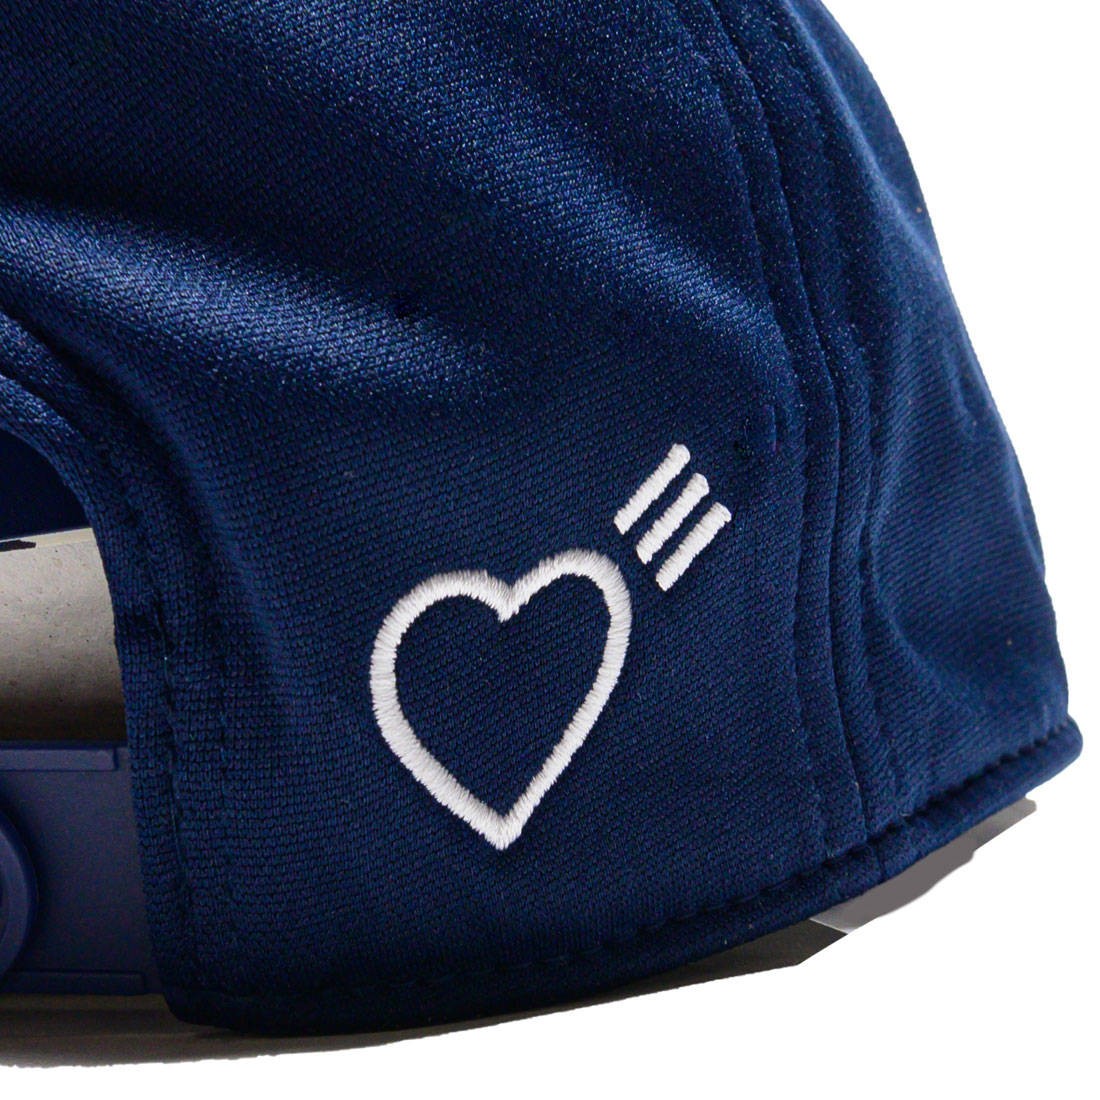 Adidas x Human Made Ball Cap (navy / collegiate navy)